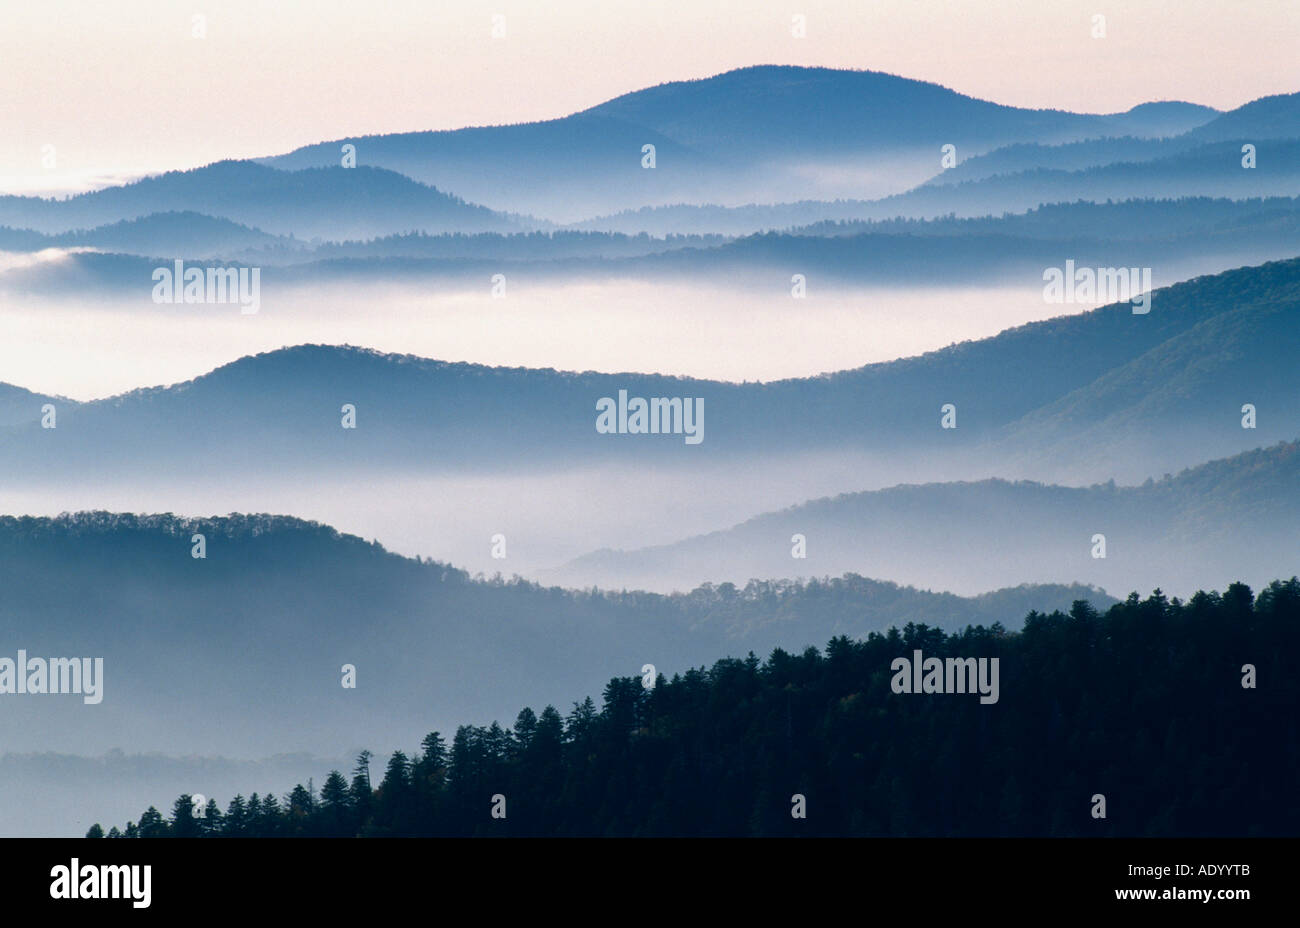 Morgennebel ueber den Appalachen Bergketten der Smoky Mountains NP Great Smoky North Carolina USA Octobre Banque D'Images